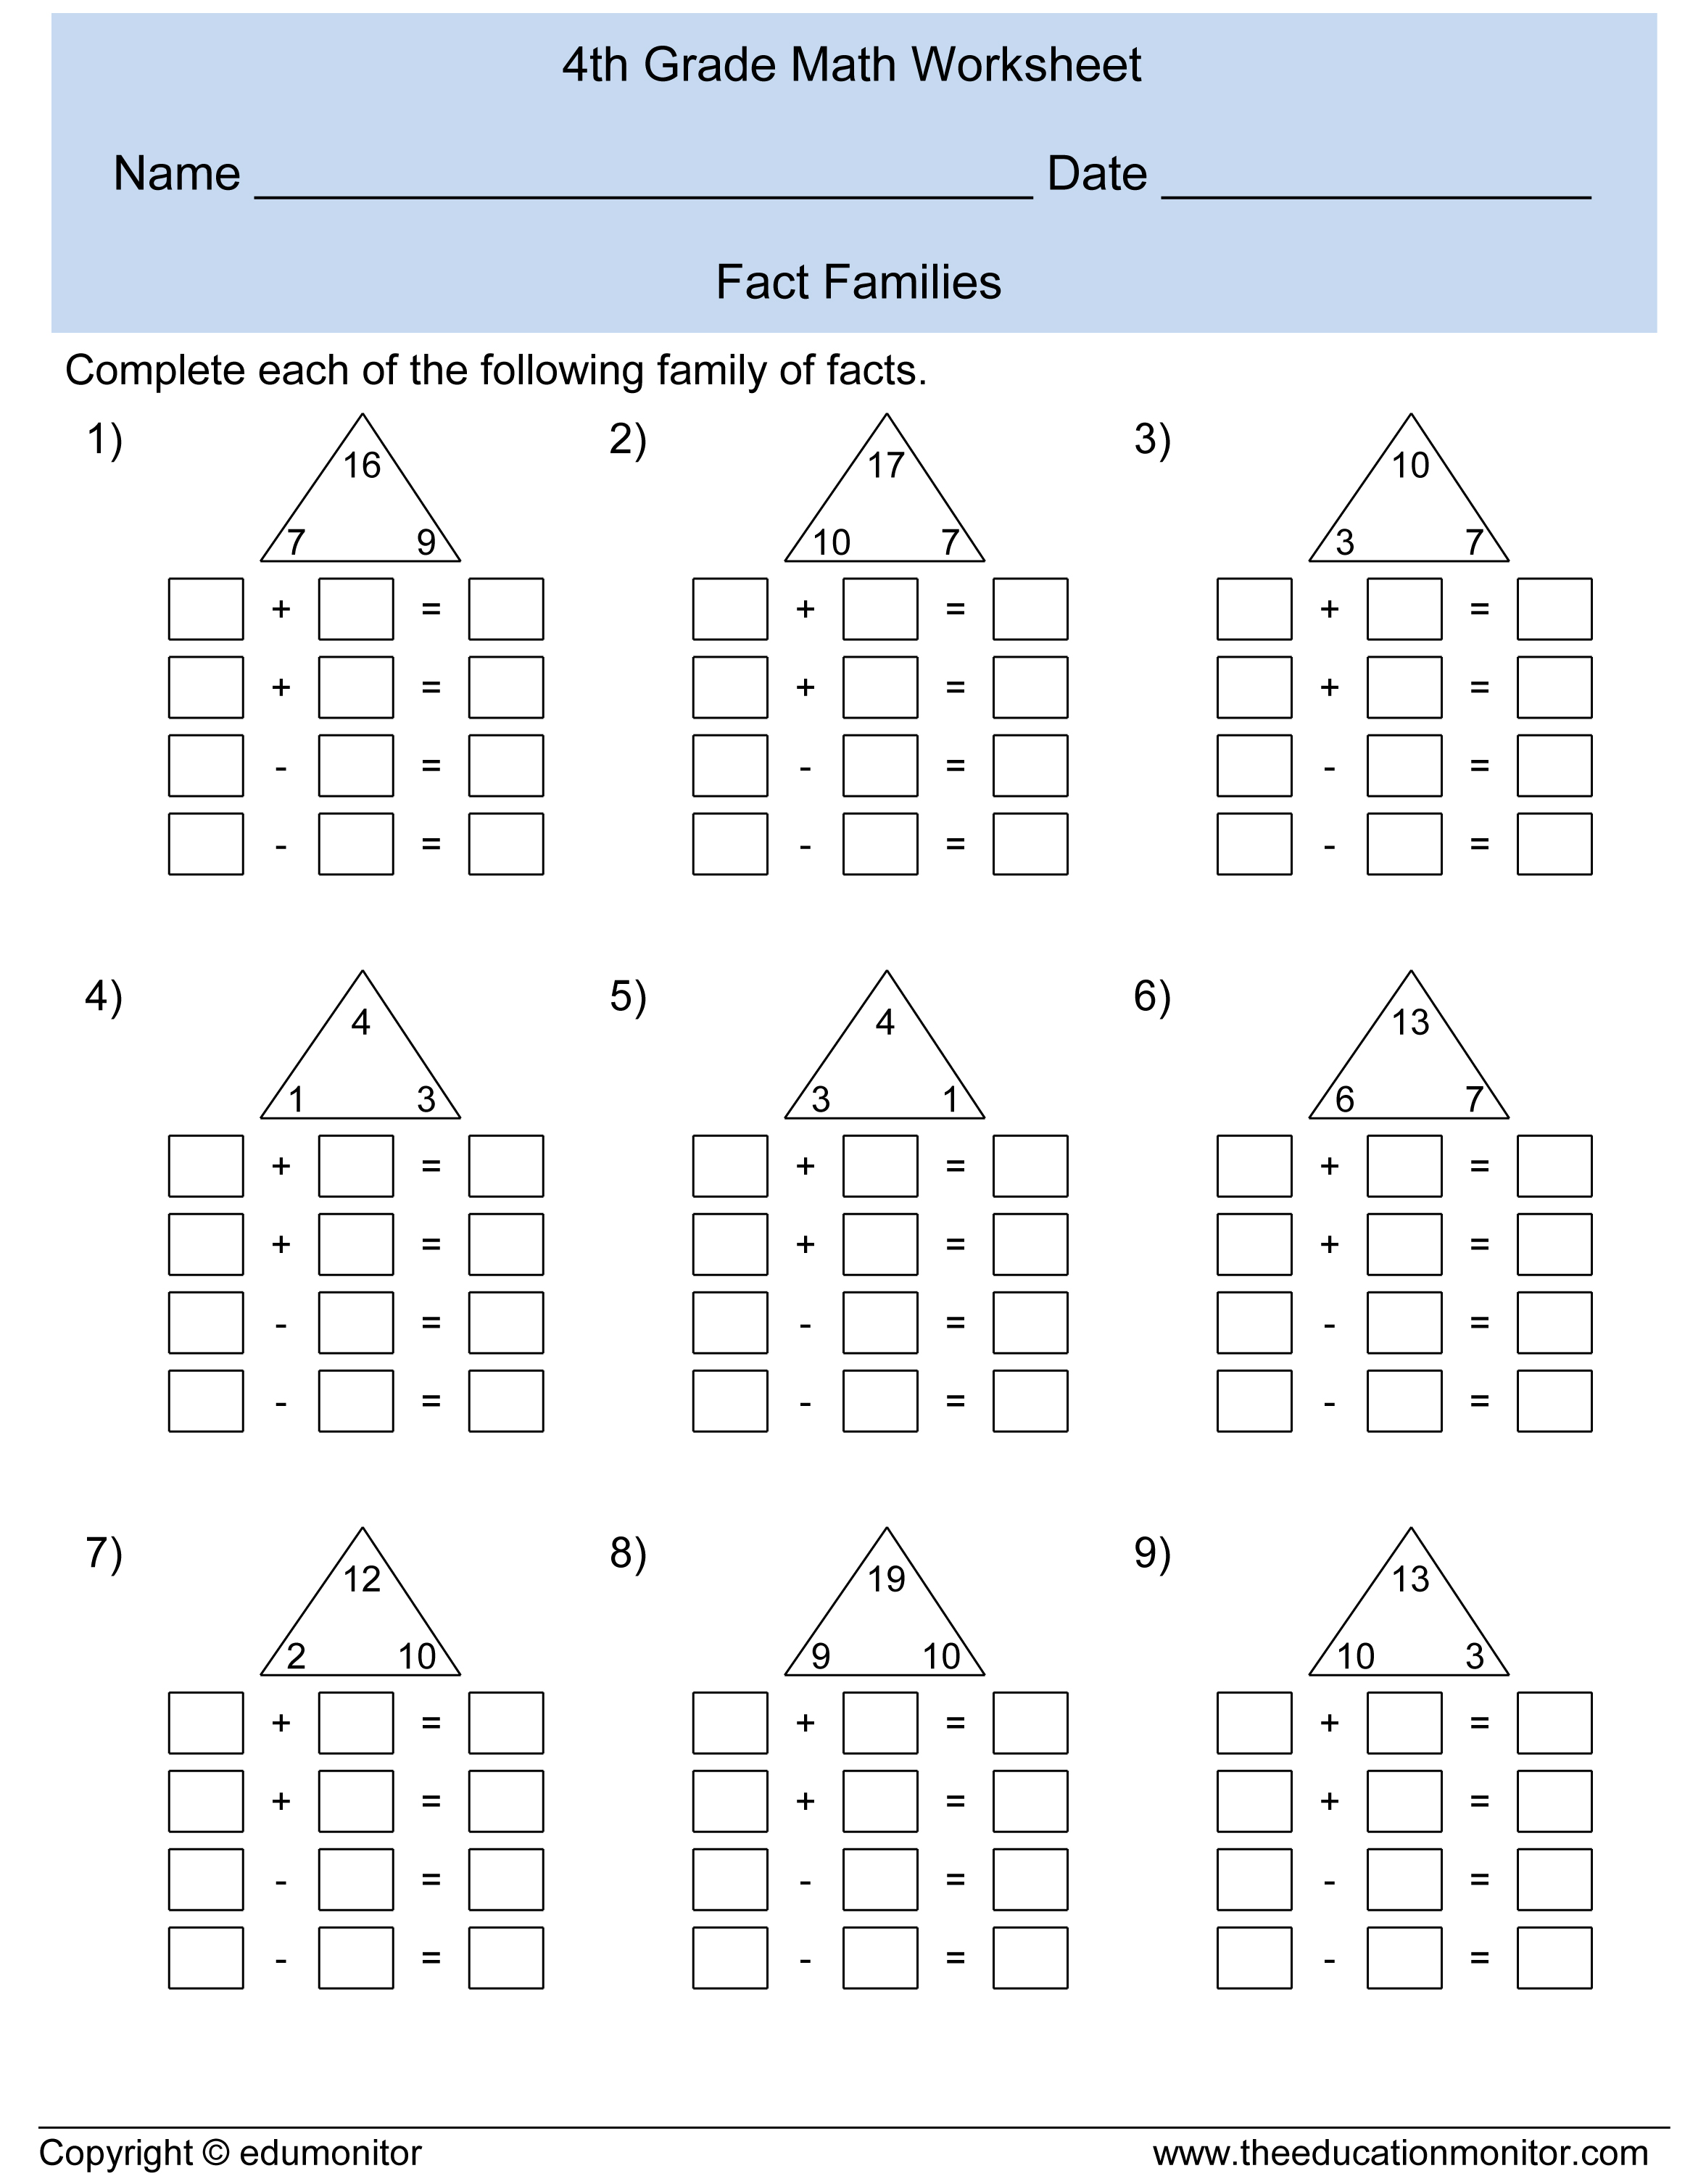 2nd Grade Math Worksheets Fact Families 495198